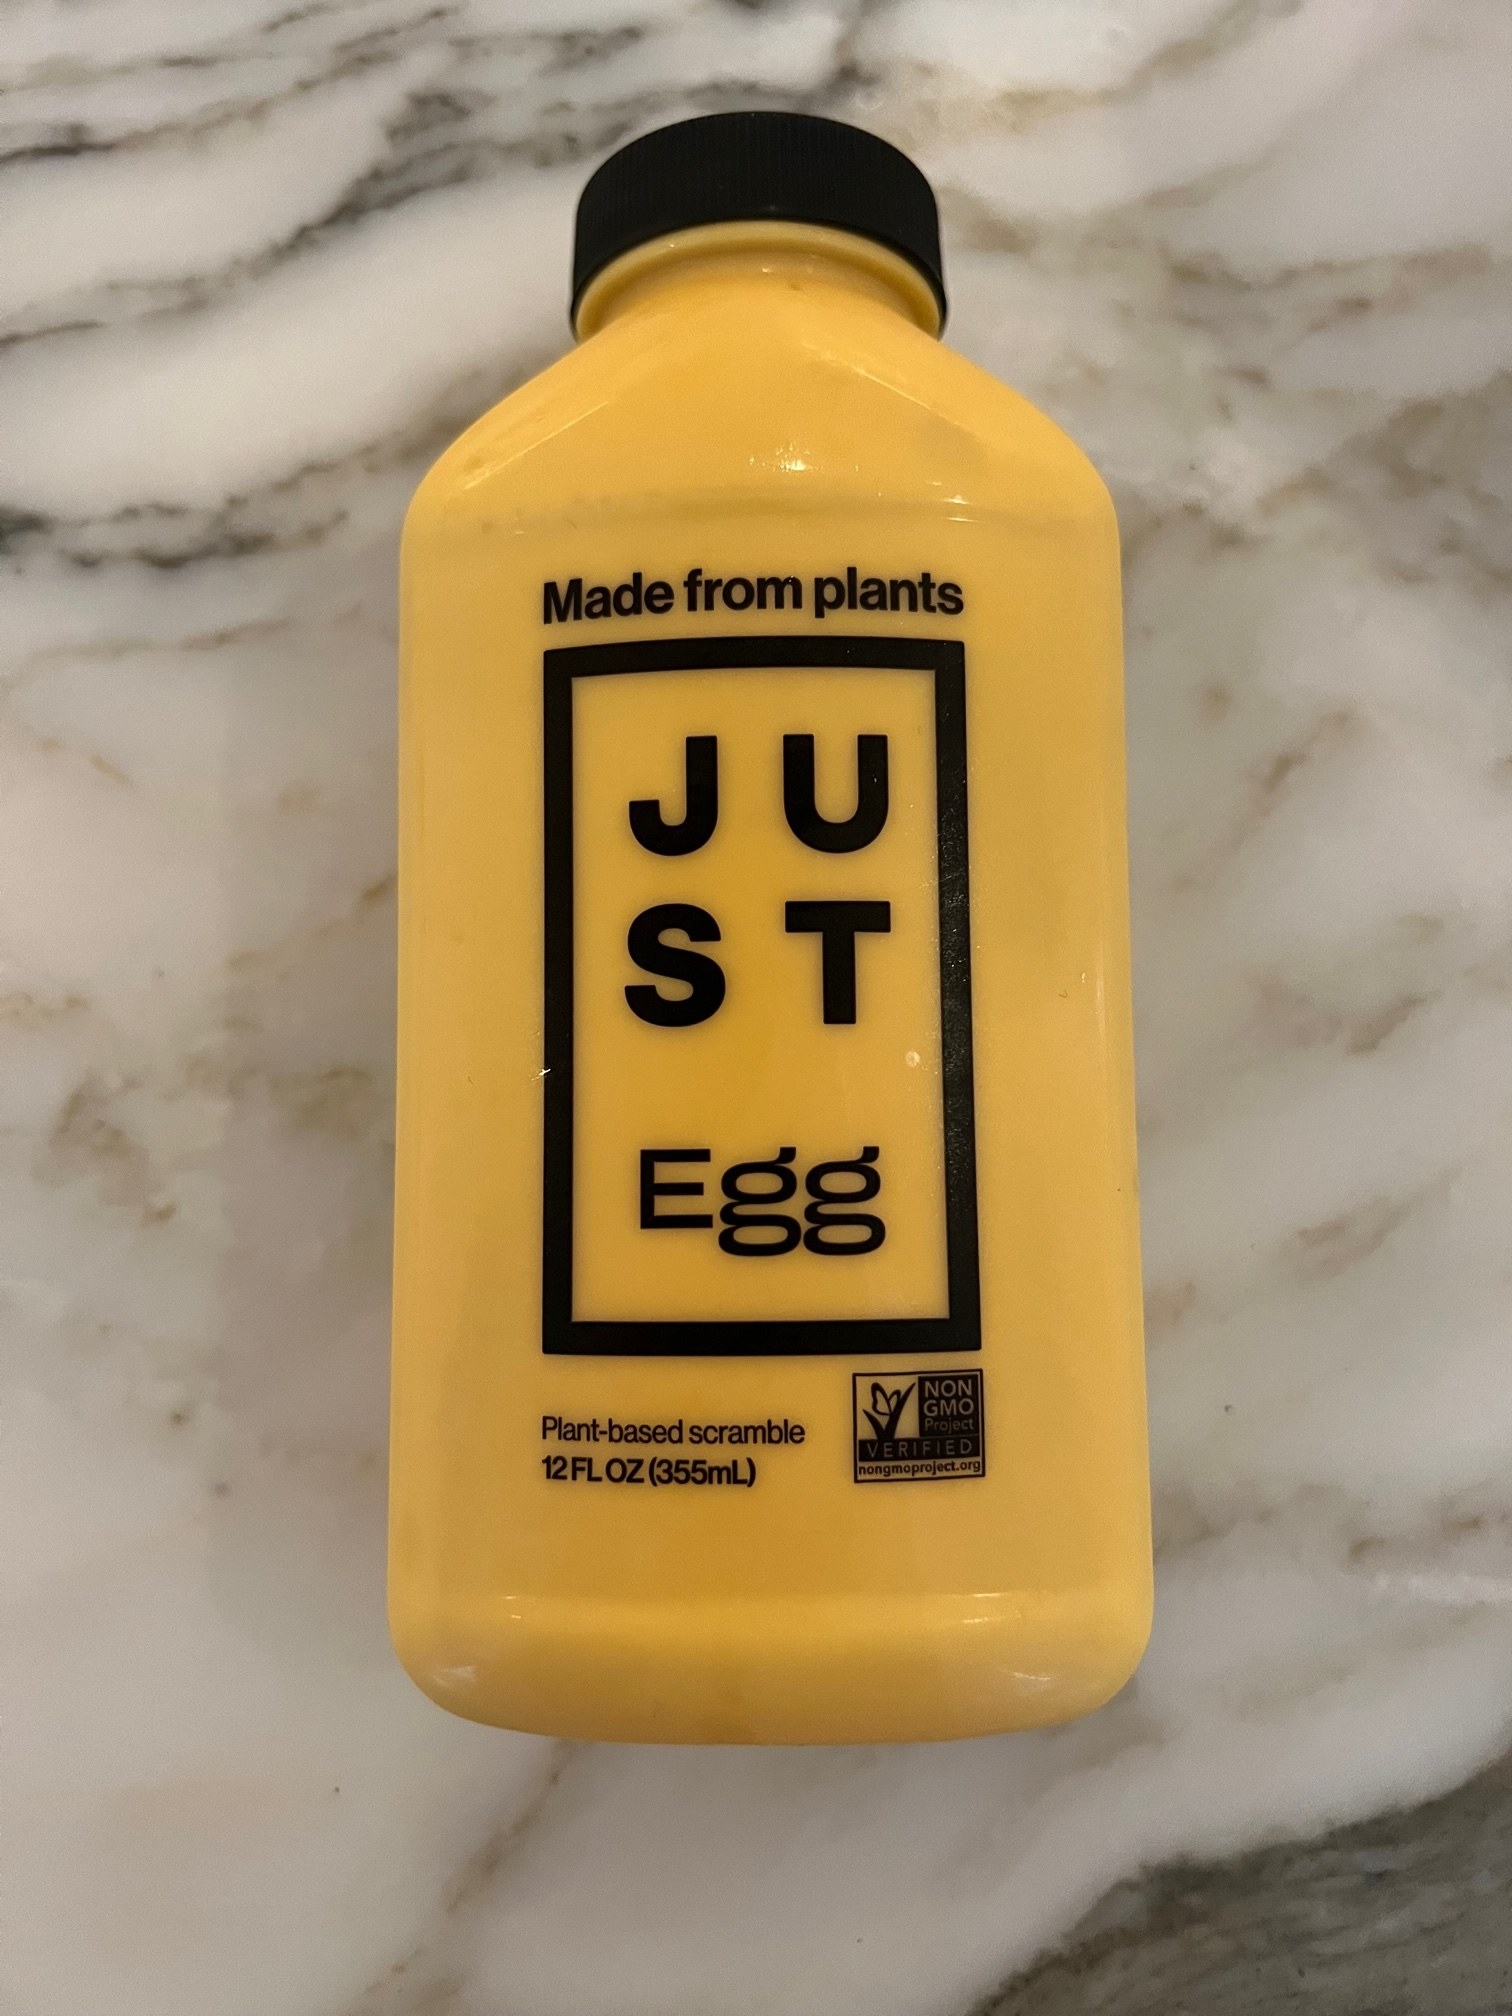 Our Trader Joes Vegan Eggs Taste Test Comparison Review